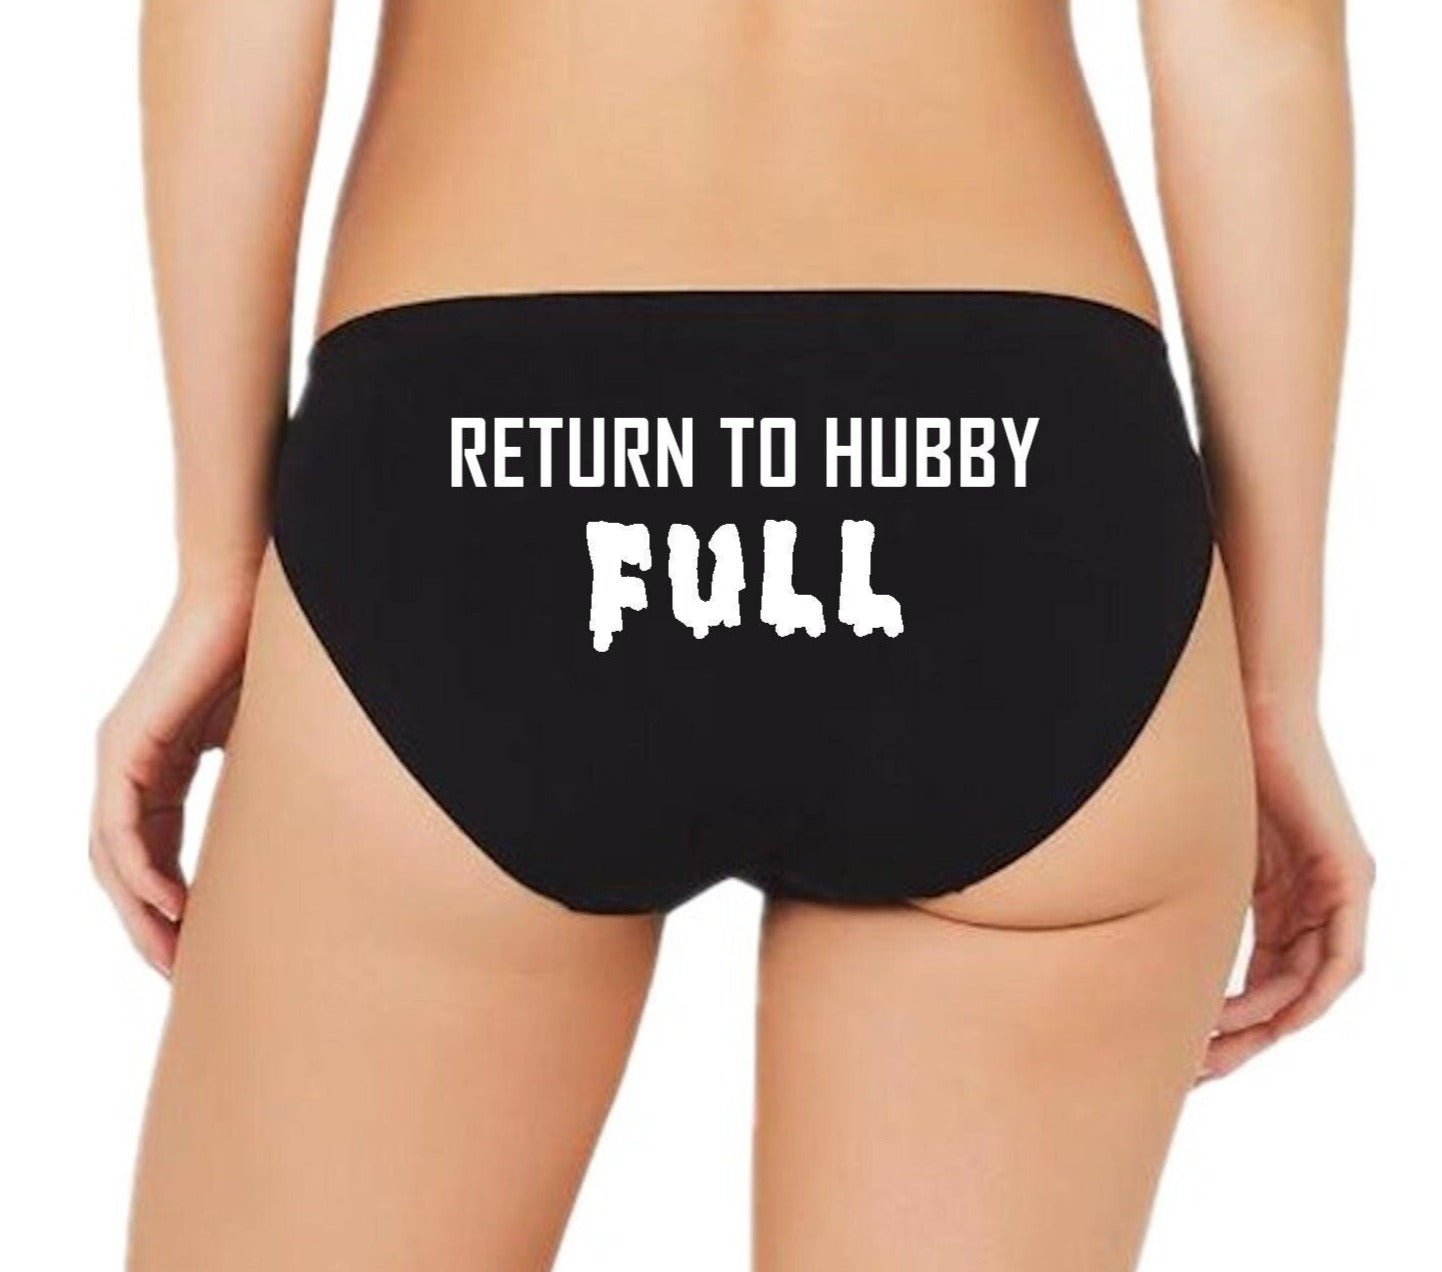 Cuckold Return to Hubby Full Panties